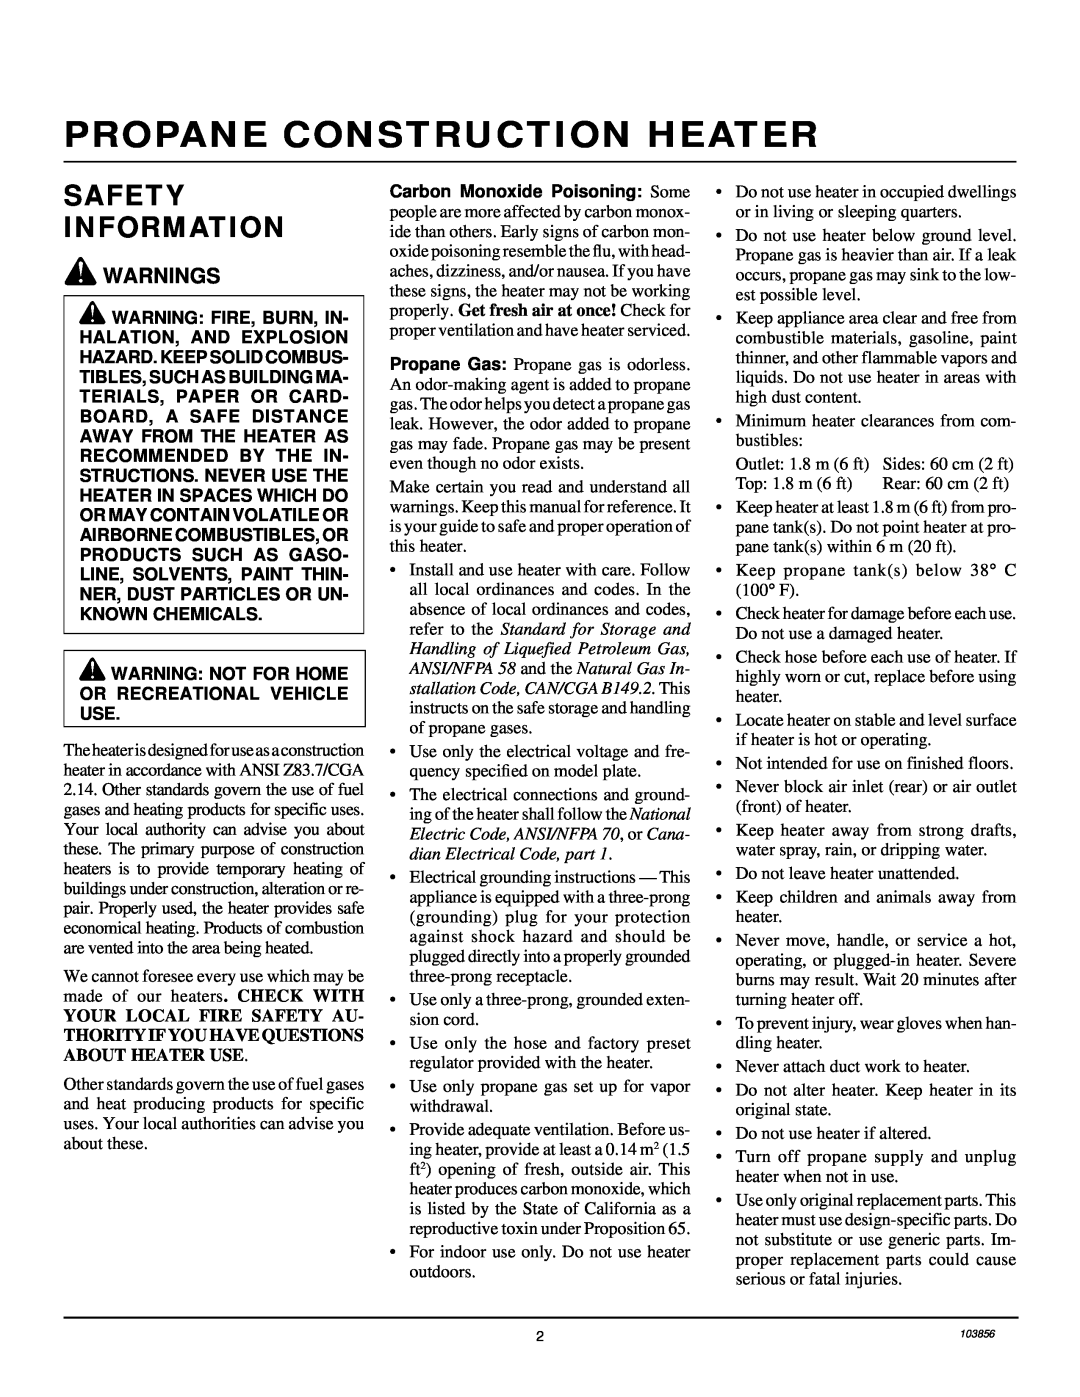 Desa RCLP50V owner manual Propane Construction Heater, Safety Information 